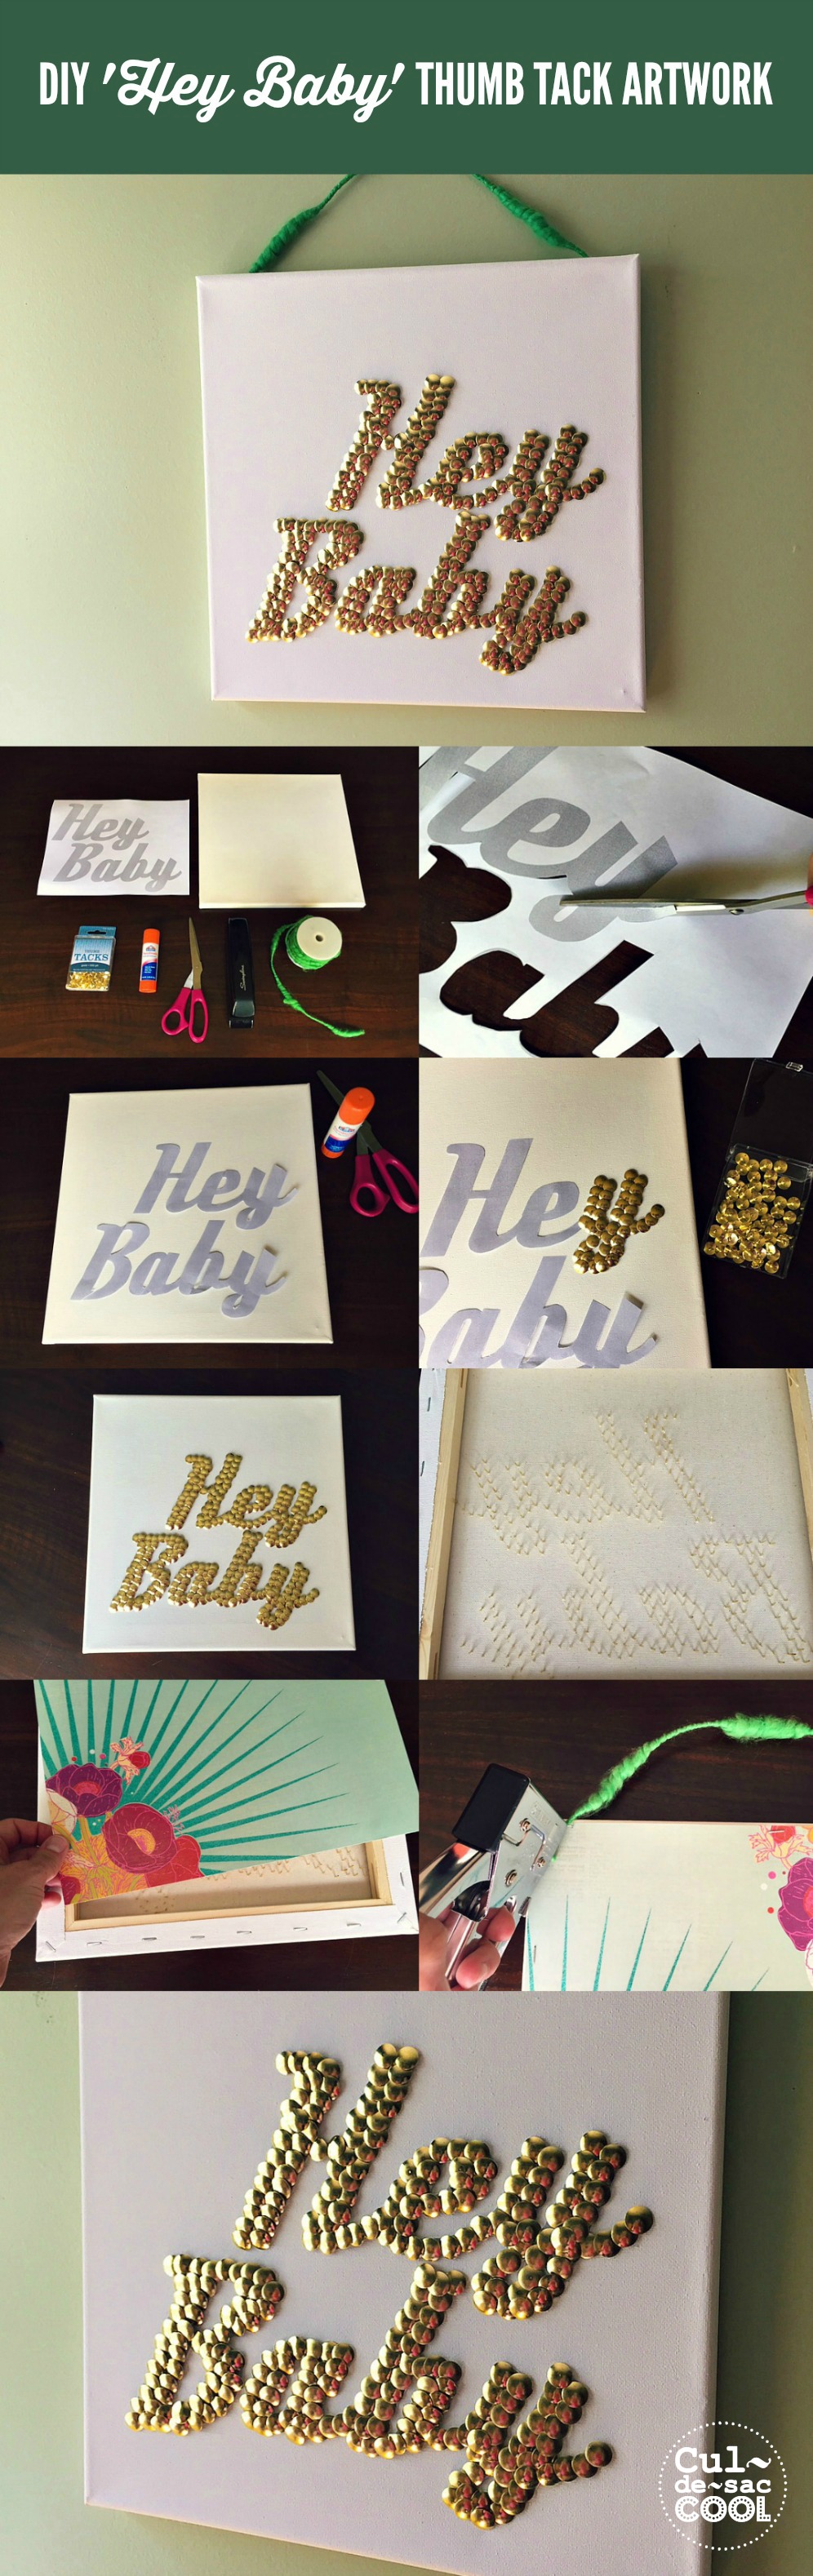 DIY 'Hey Baby' Thumb Tack Artwork Collage